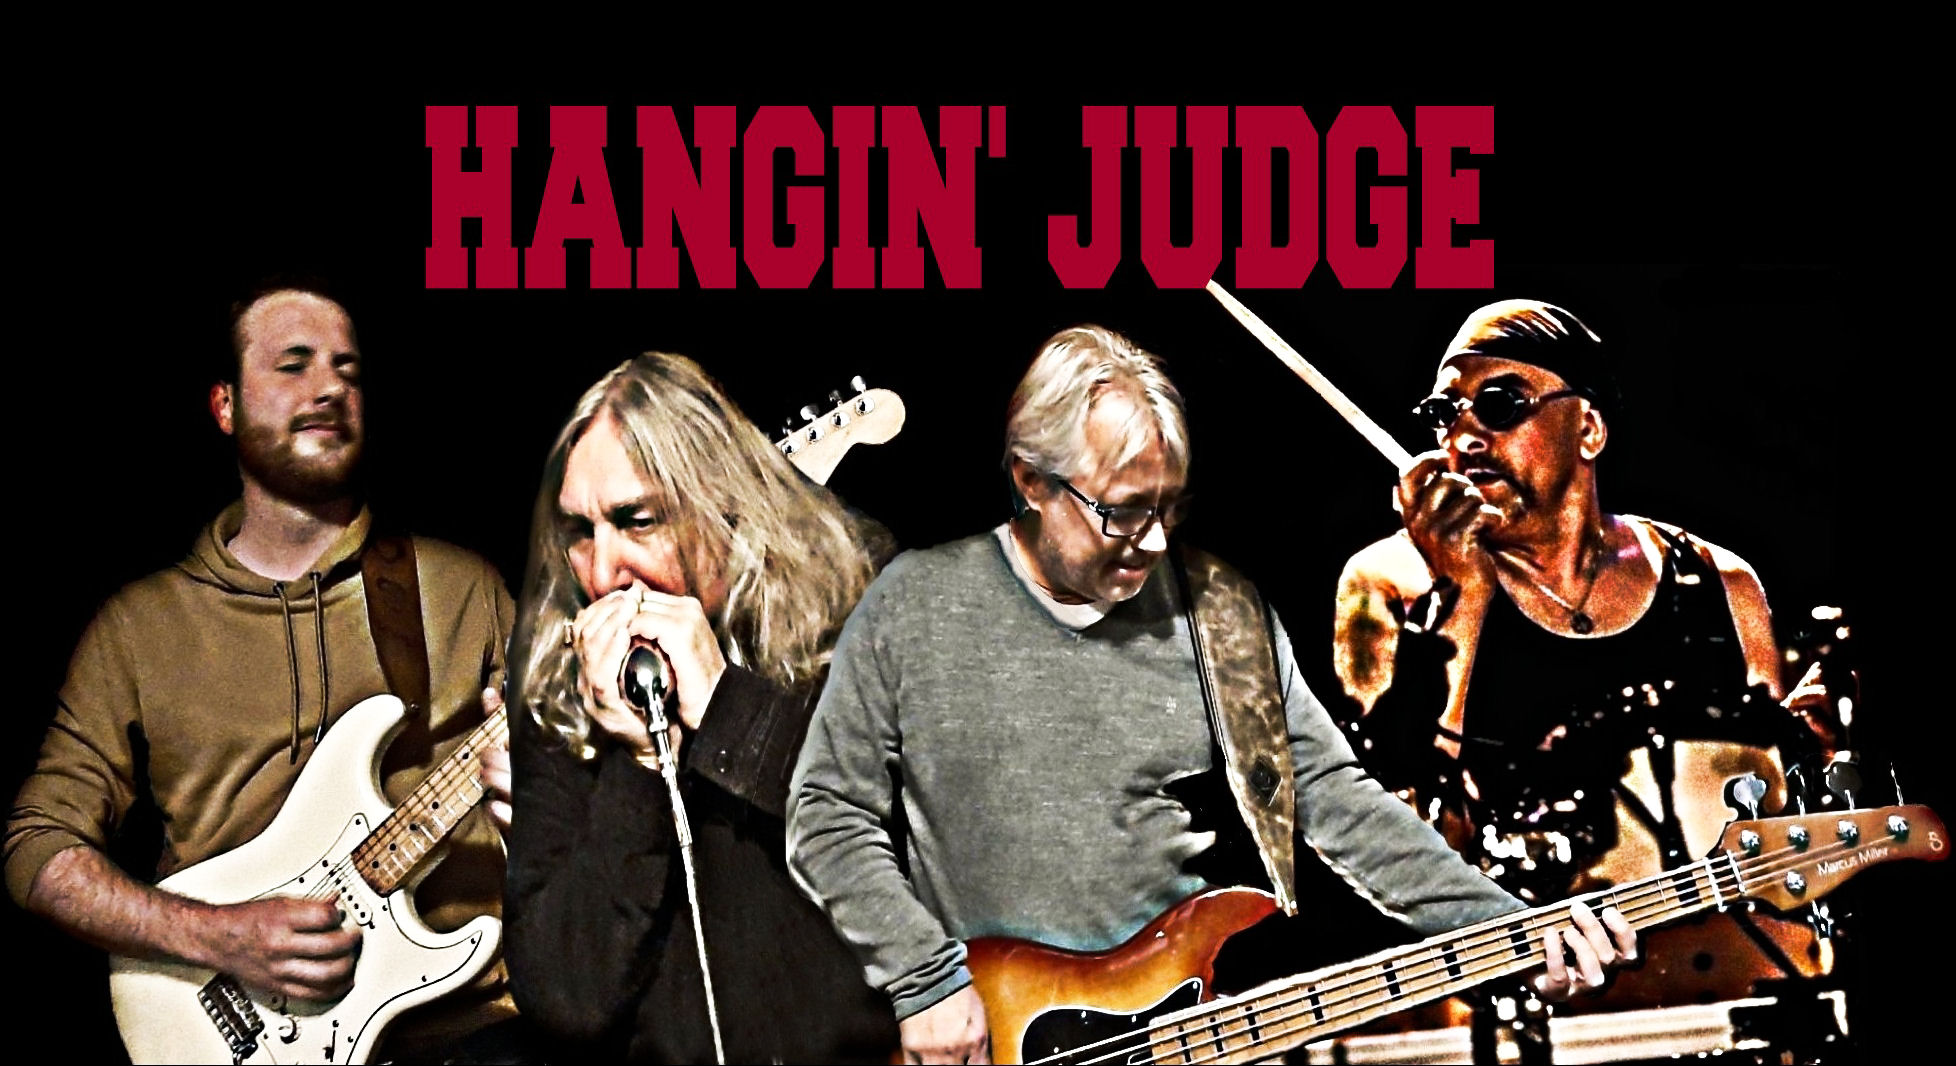 Hangin’ Judge